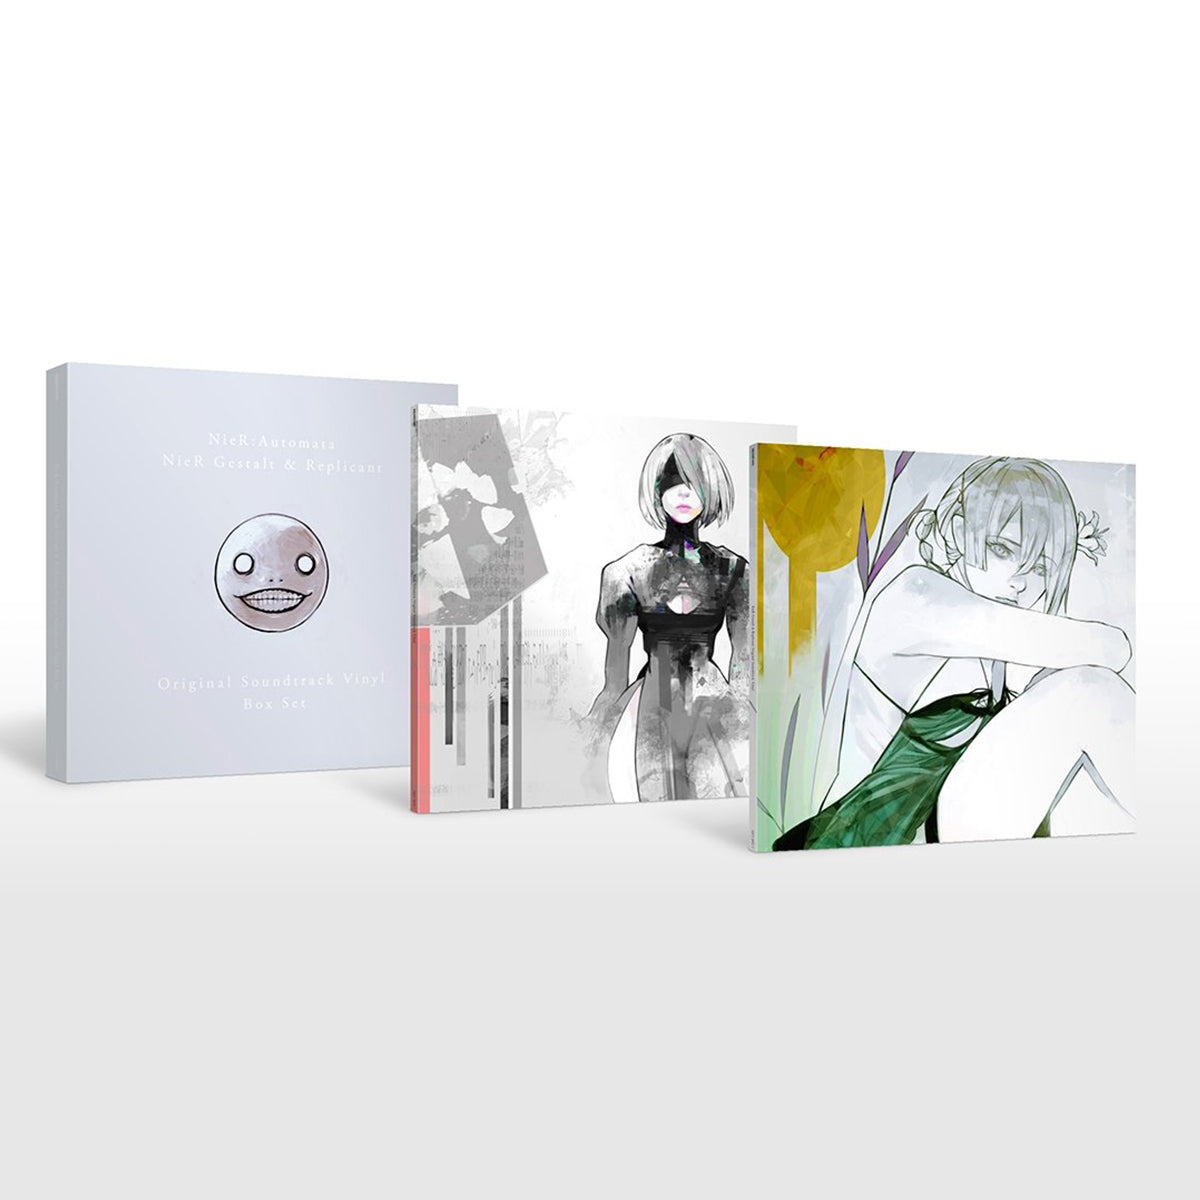 NIER: AUTOMATA / NIER GESTALT & REPLICANT OST VINYL BOX SET (4 LPs) (New  Vinyl) (Limited Edition) (Japan Pressings)